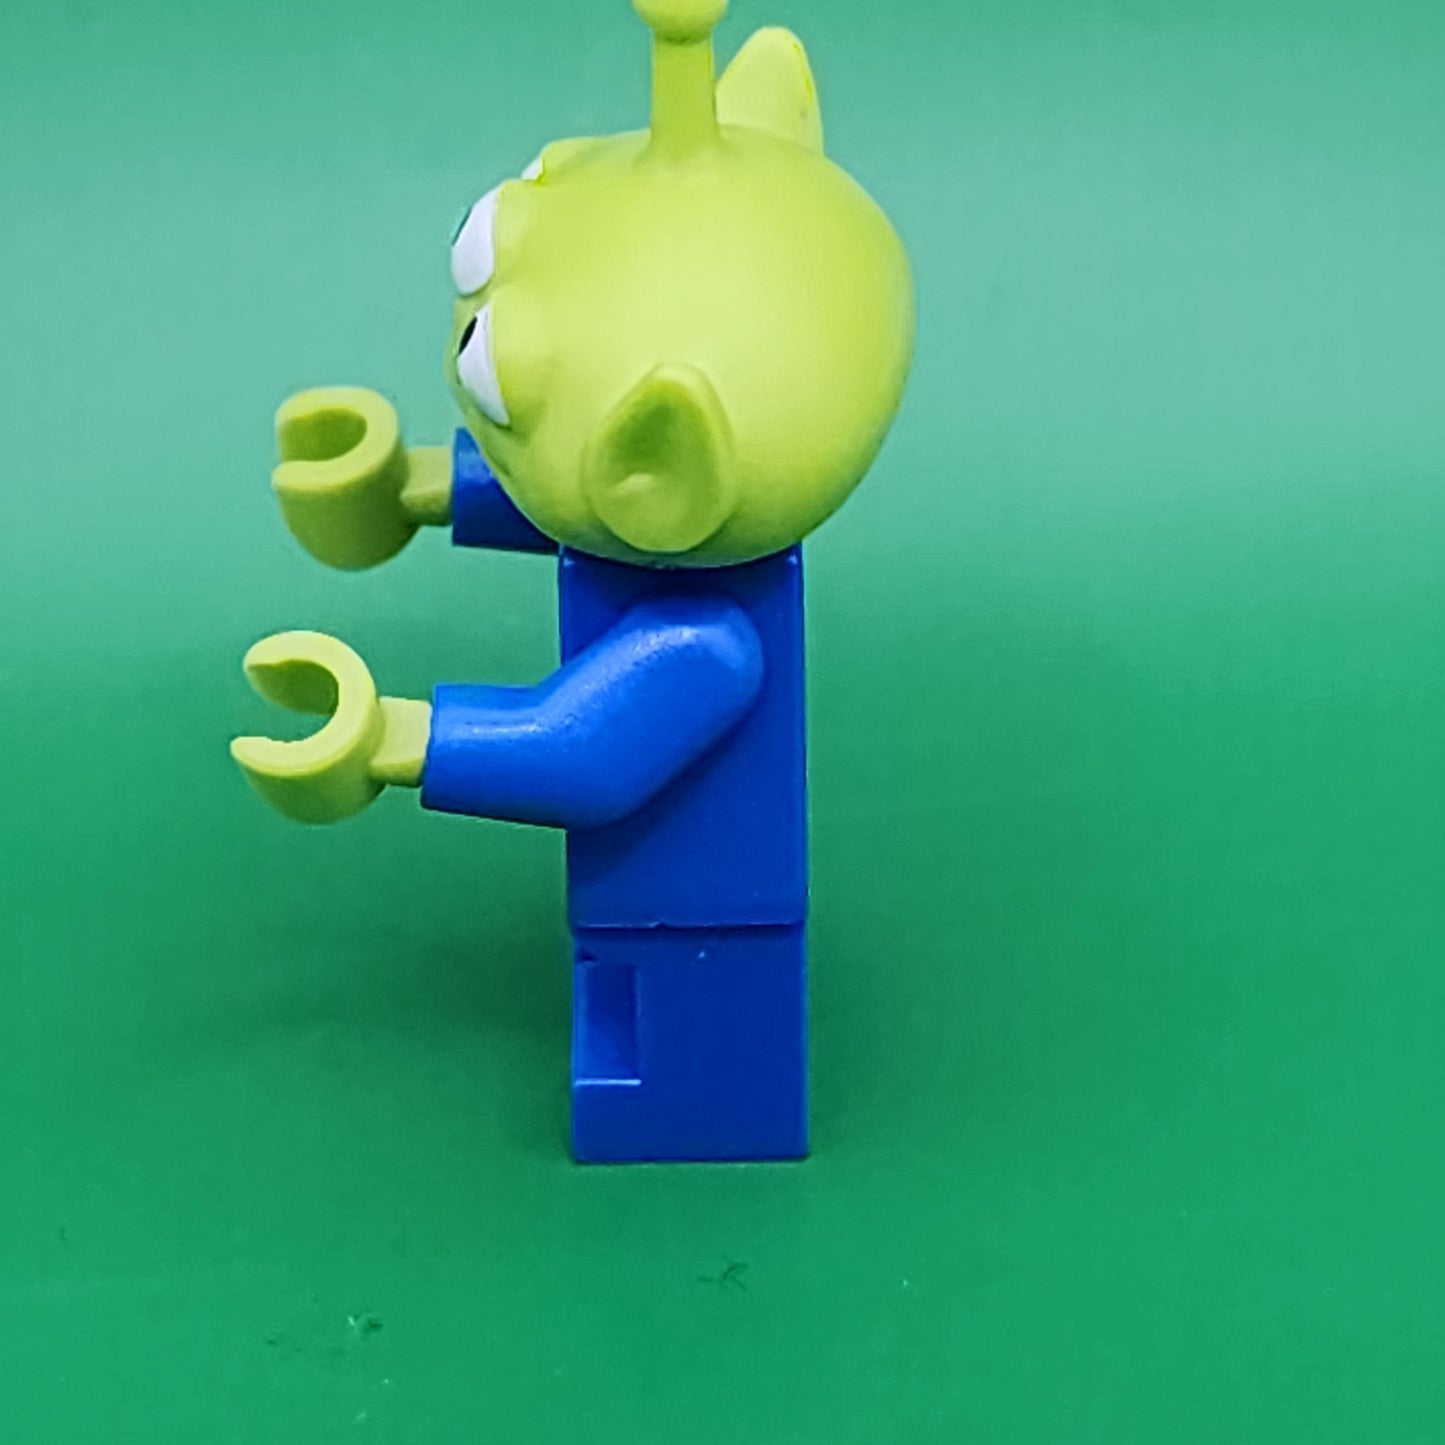 Lego Alien Minifigure toy006 Toy Story